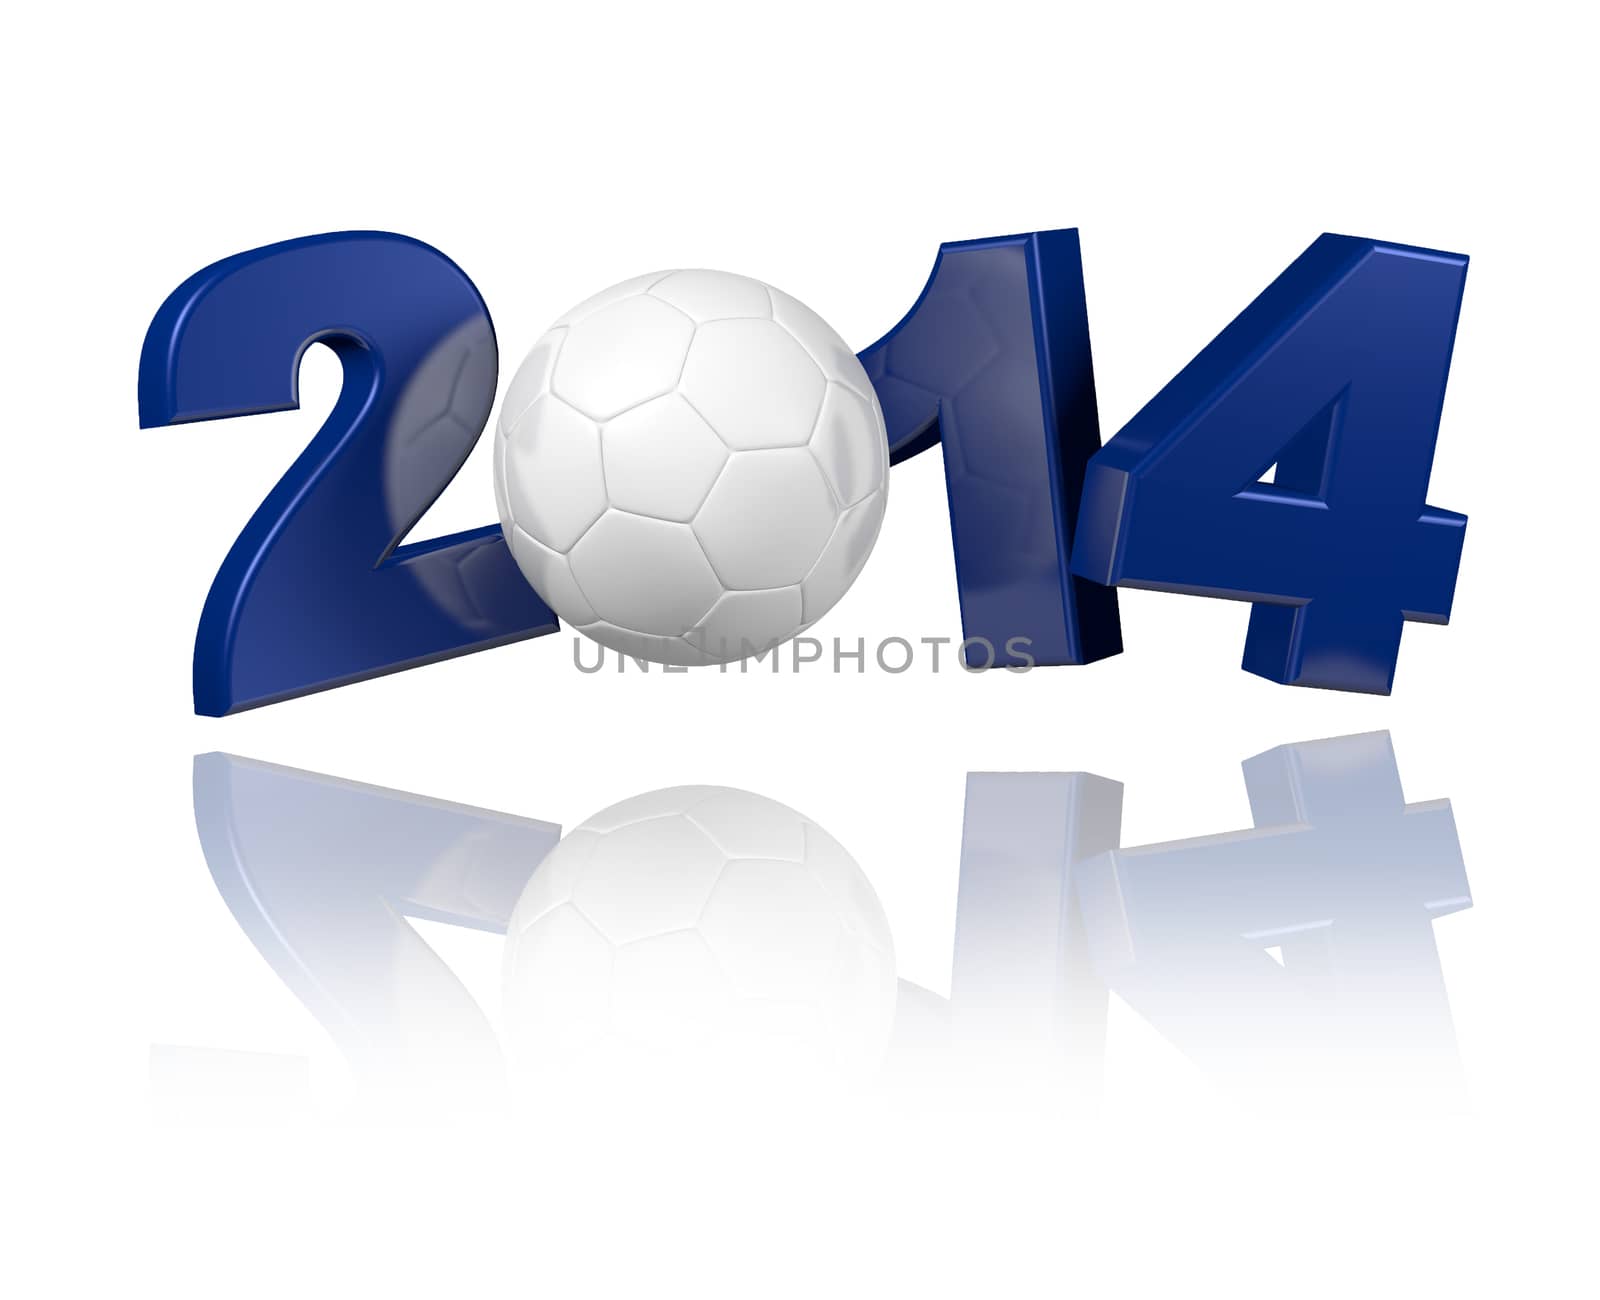 Handball 2014 design by shkyo30